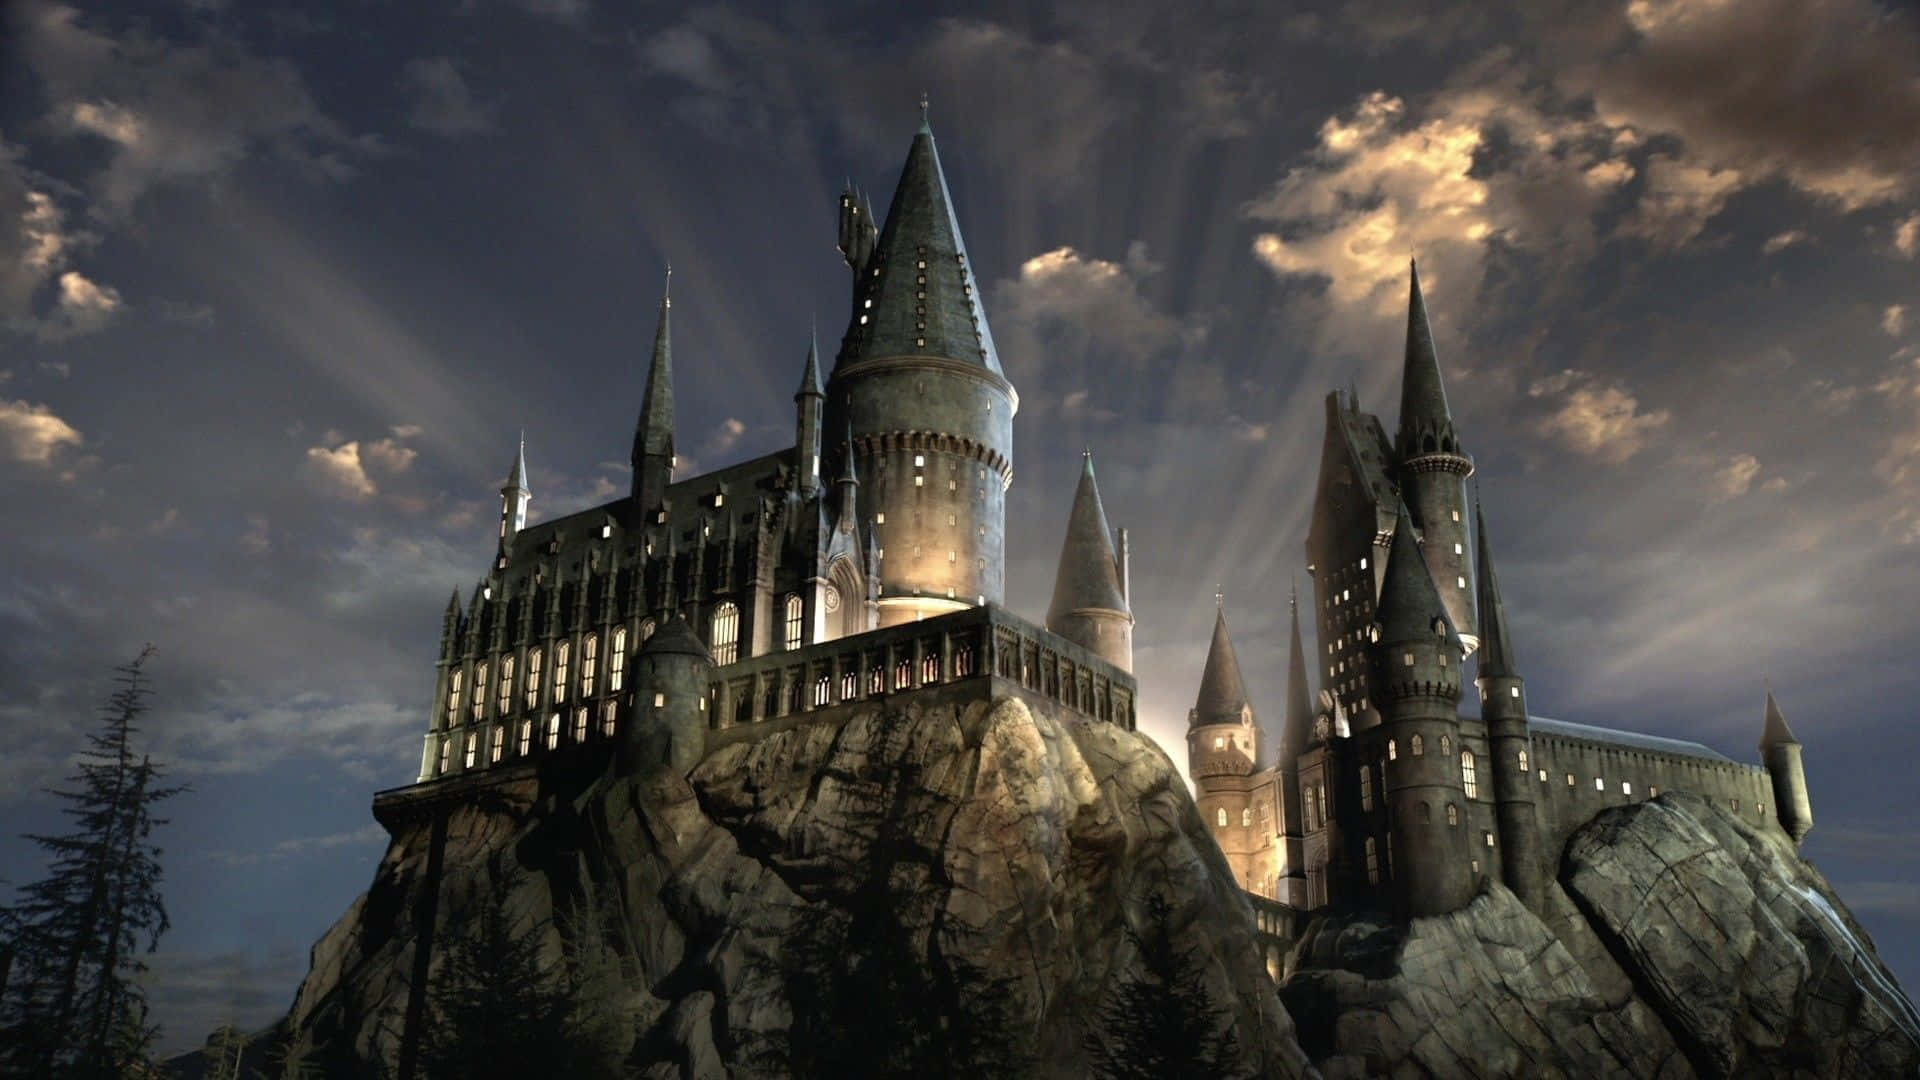 Imágenes Del Castillo De Hogwarts